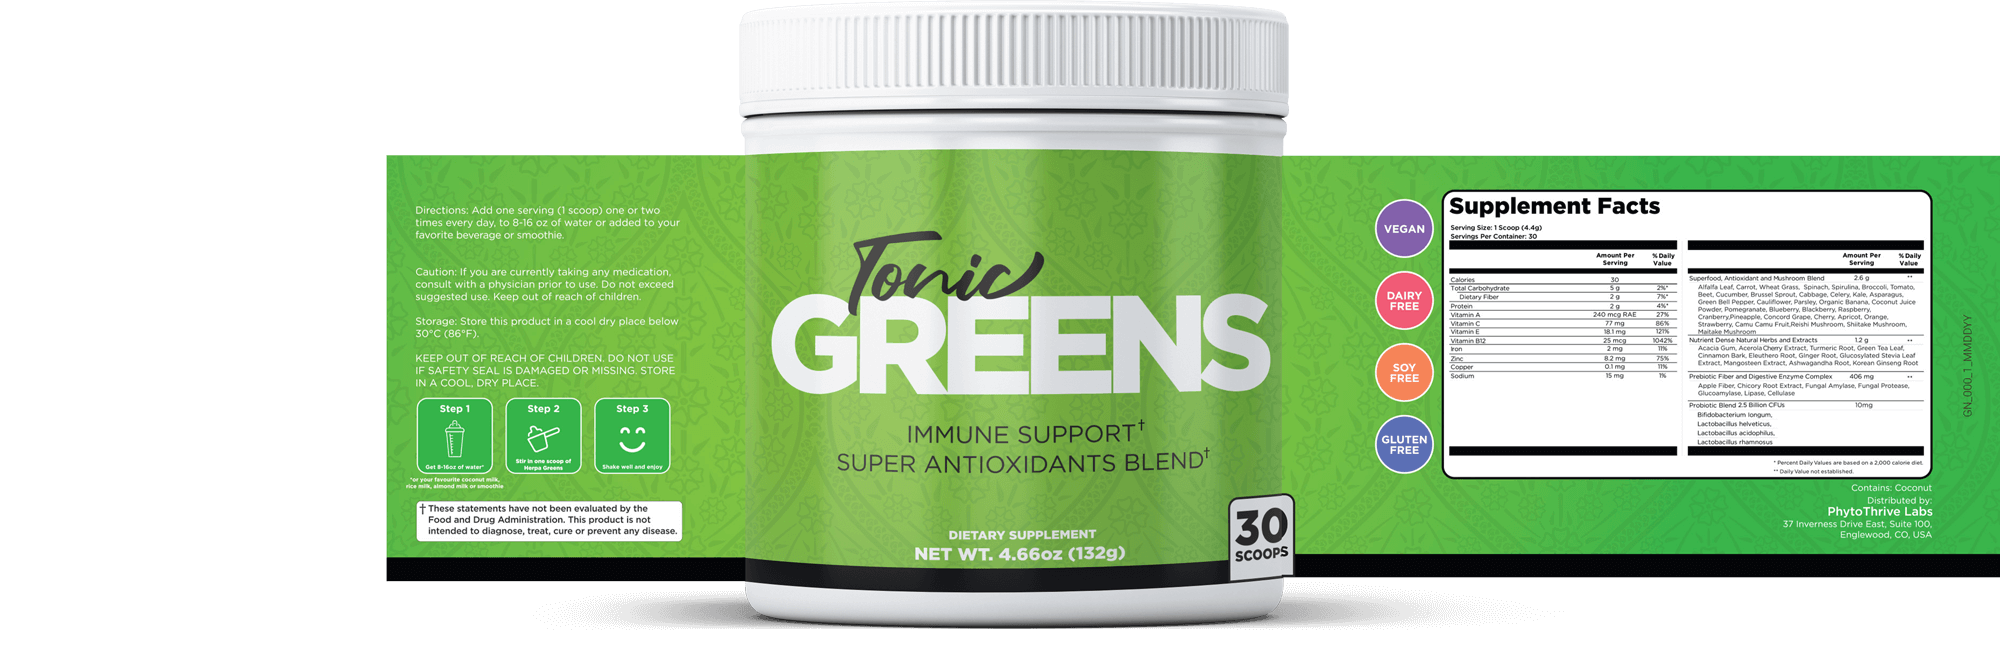 Ingredients of Tonic Greens